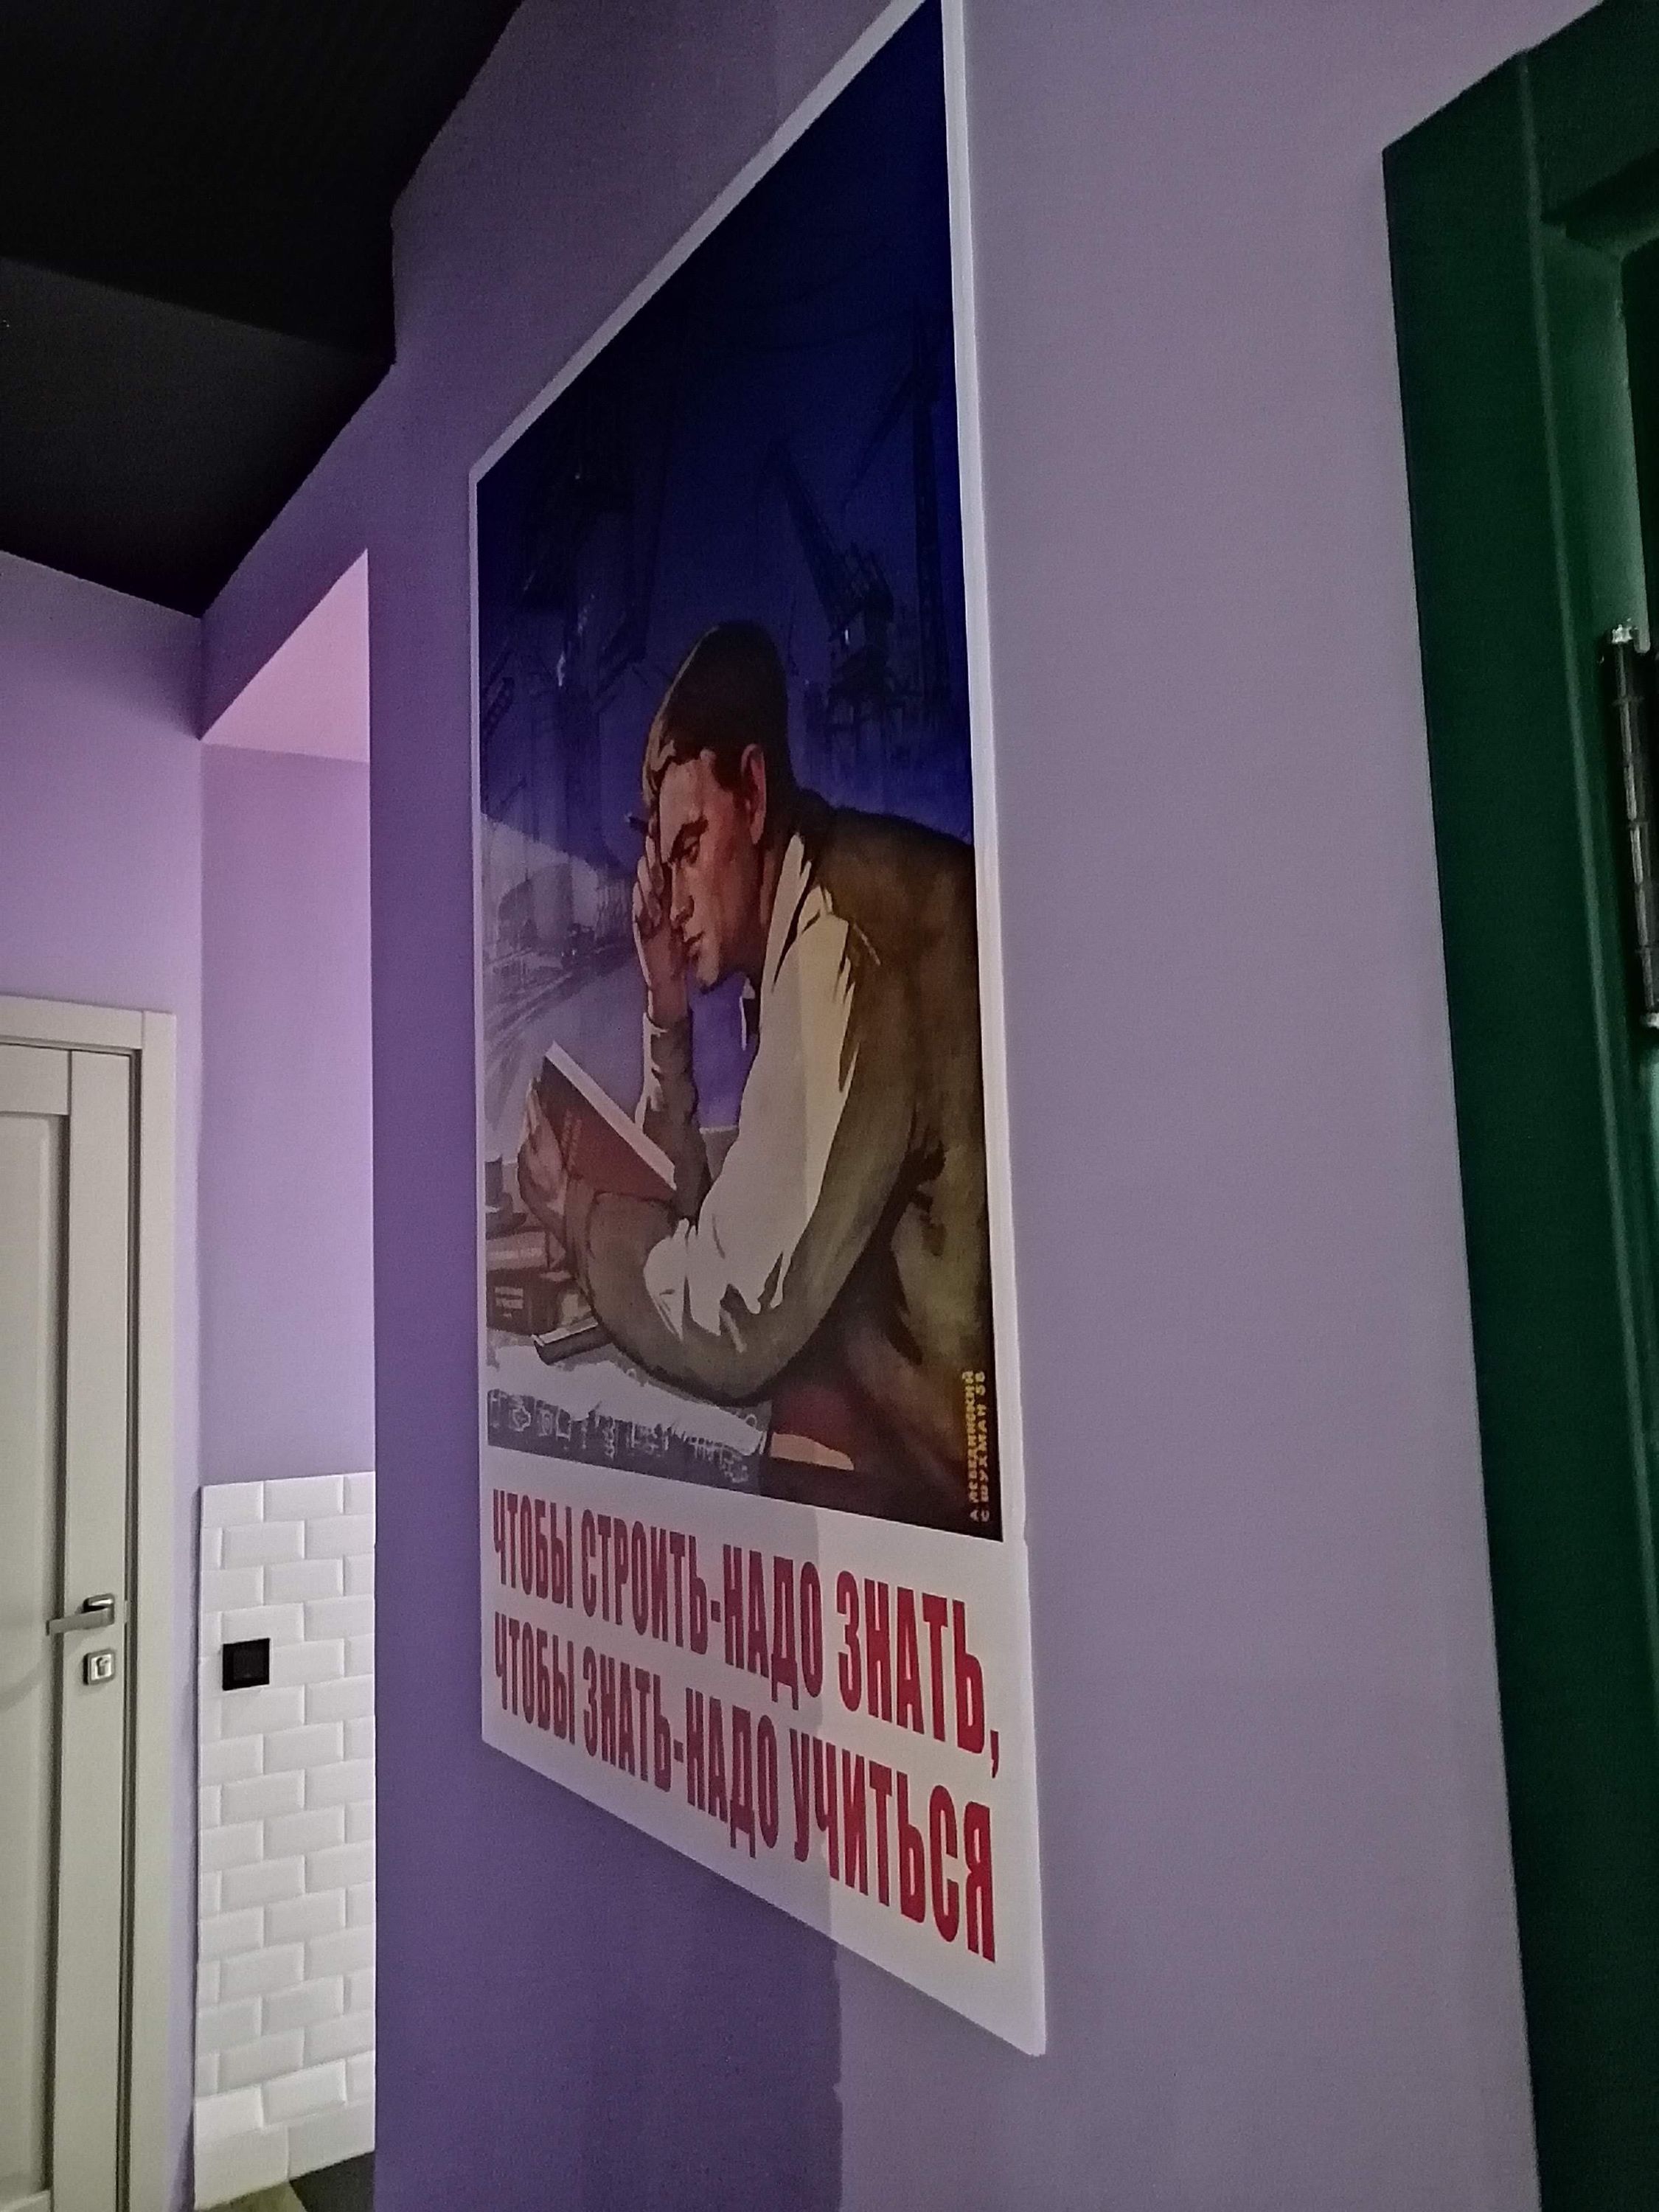 Soviet Political Poster